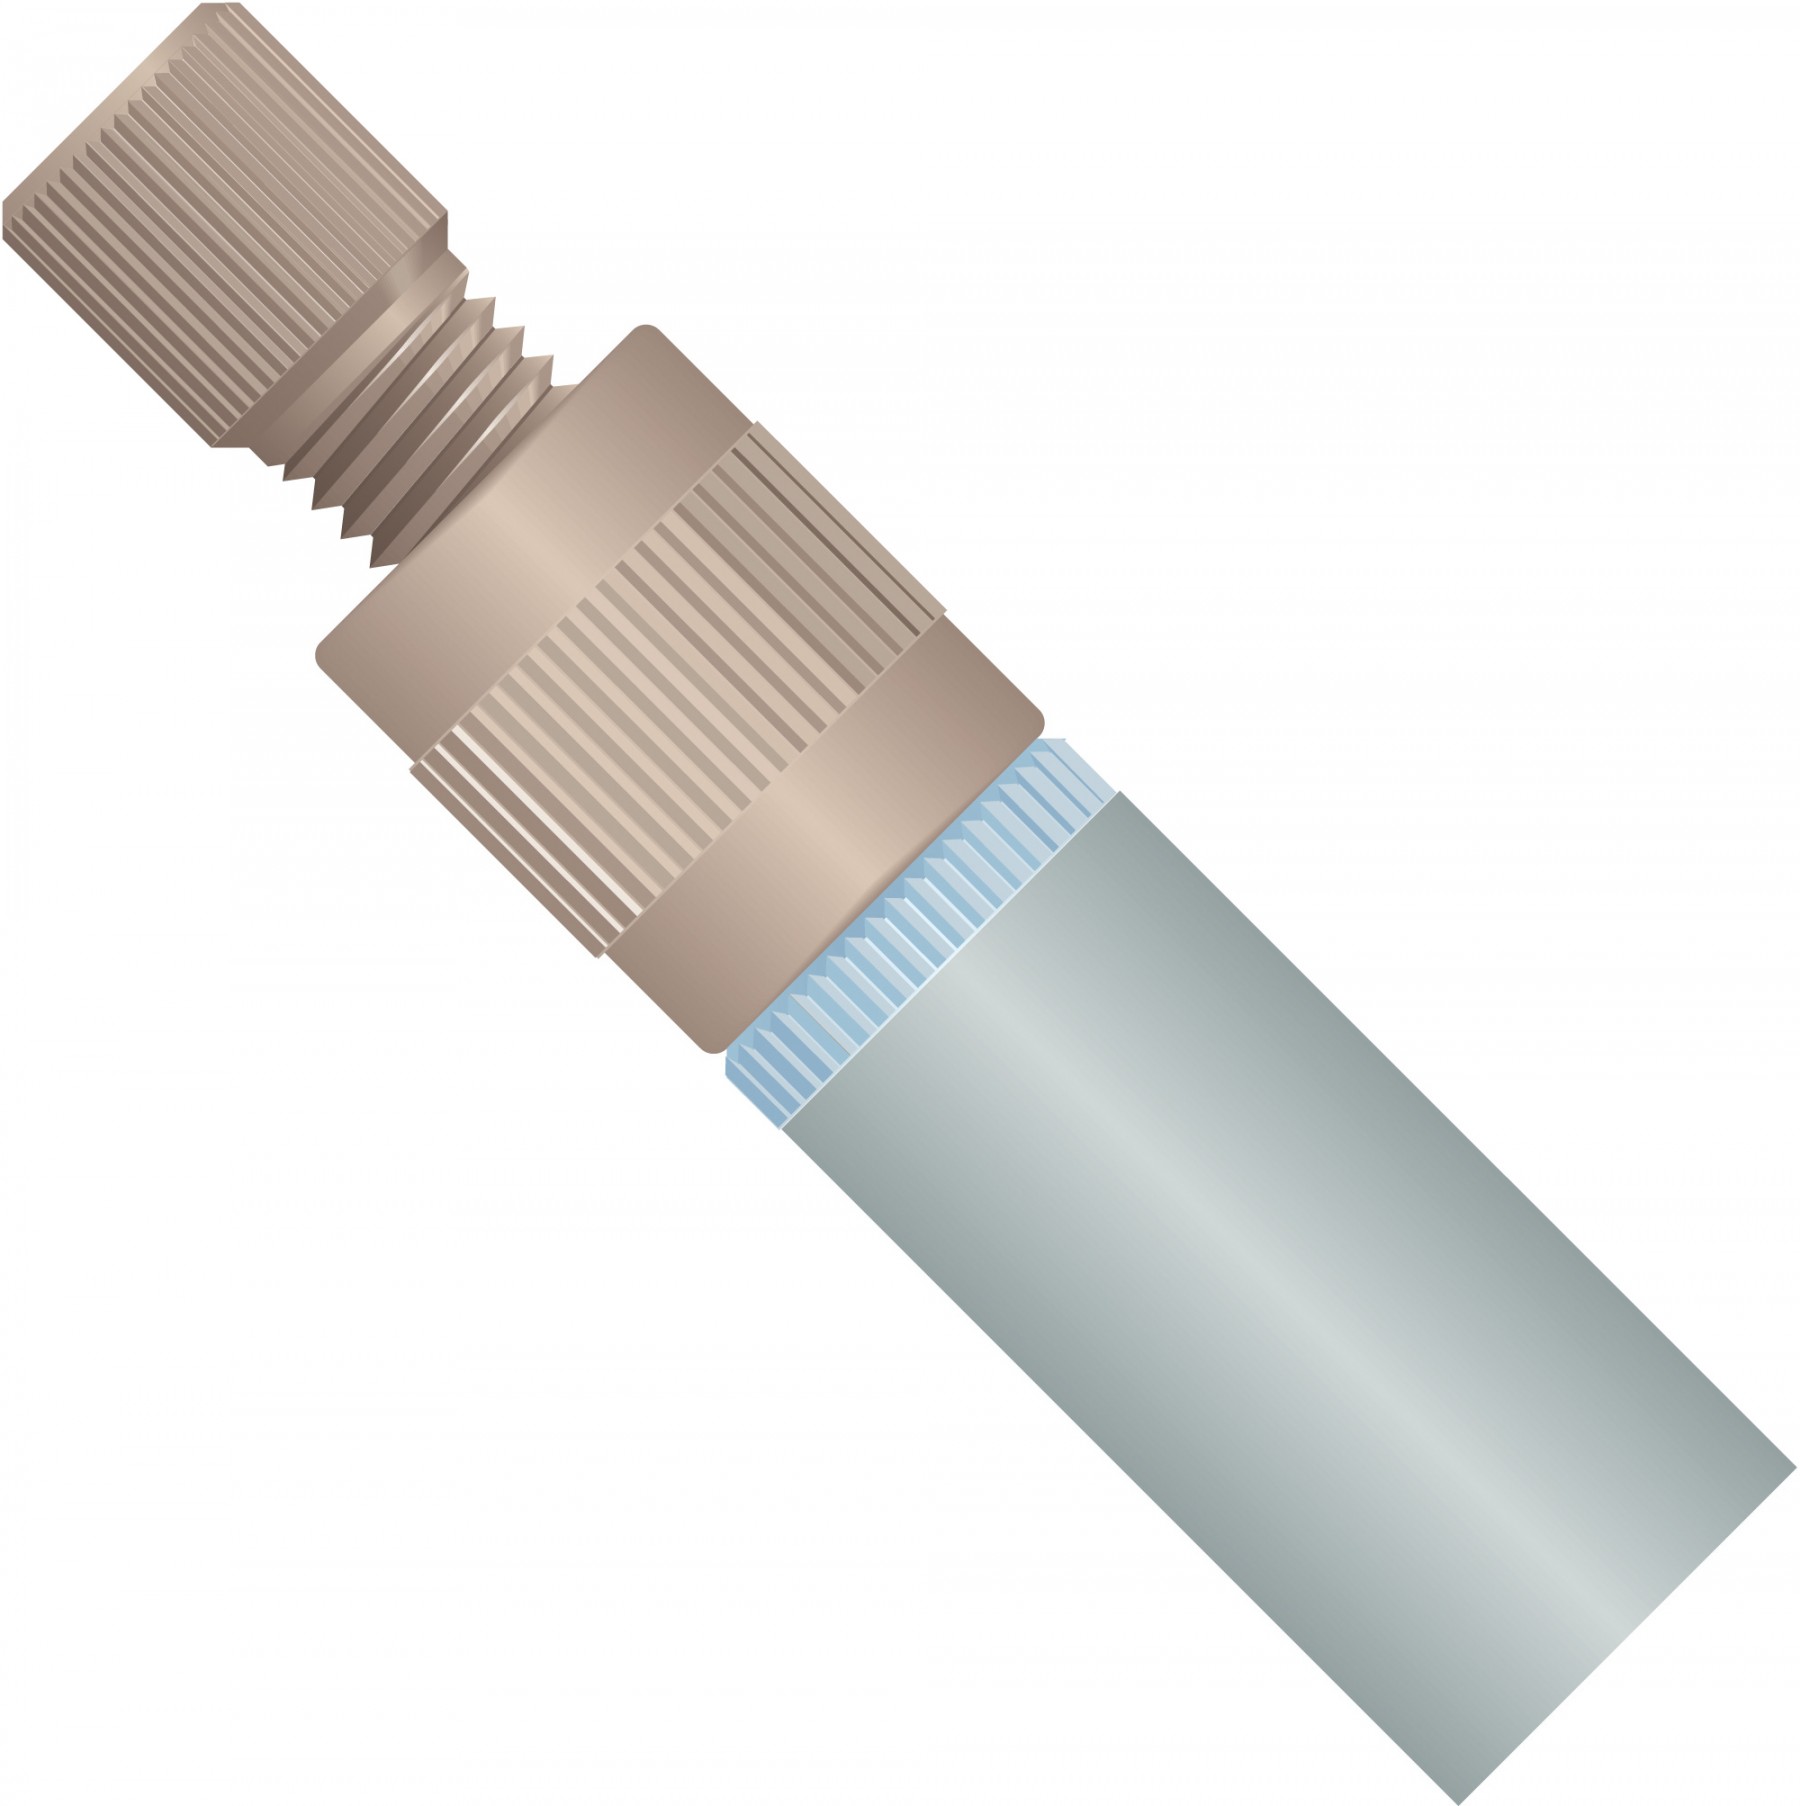 Filters & Frits: Inlet Solvent Filter Assy. (BOB), 2Âµm, 1/8" OD Tubing, SST, PEEKâ¢, ETFE (incl. (1) XP-130)